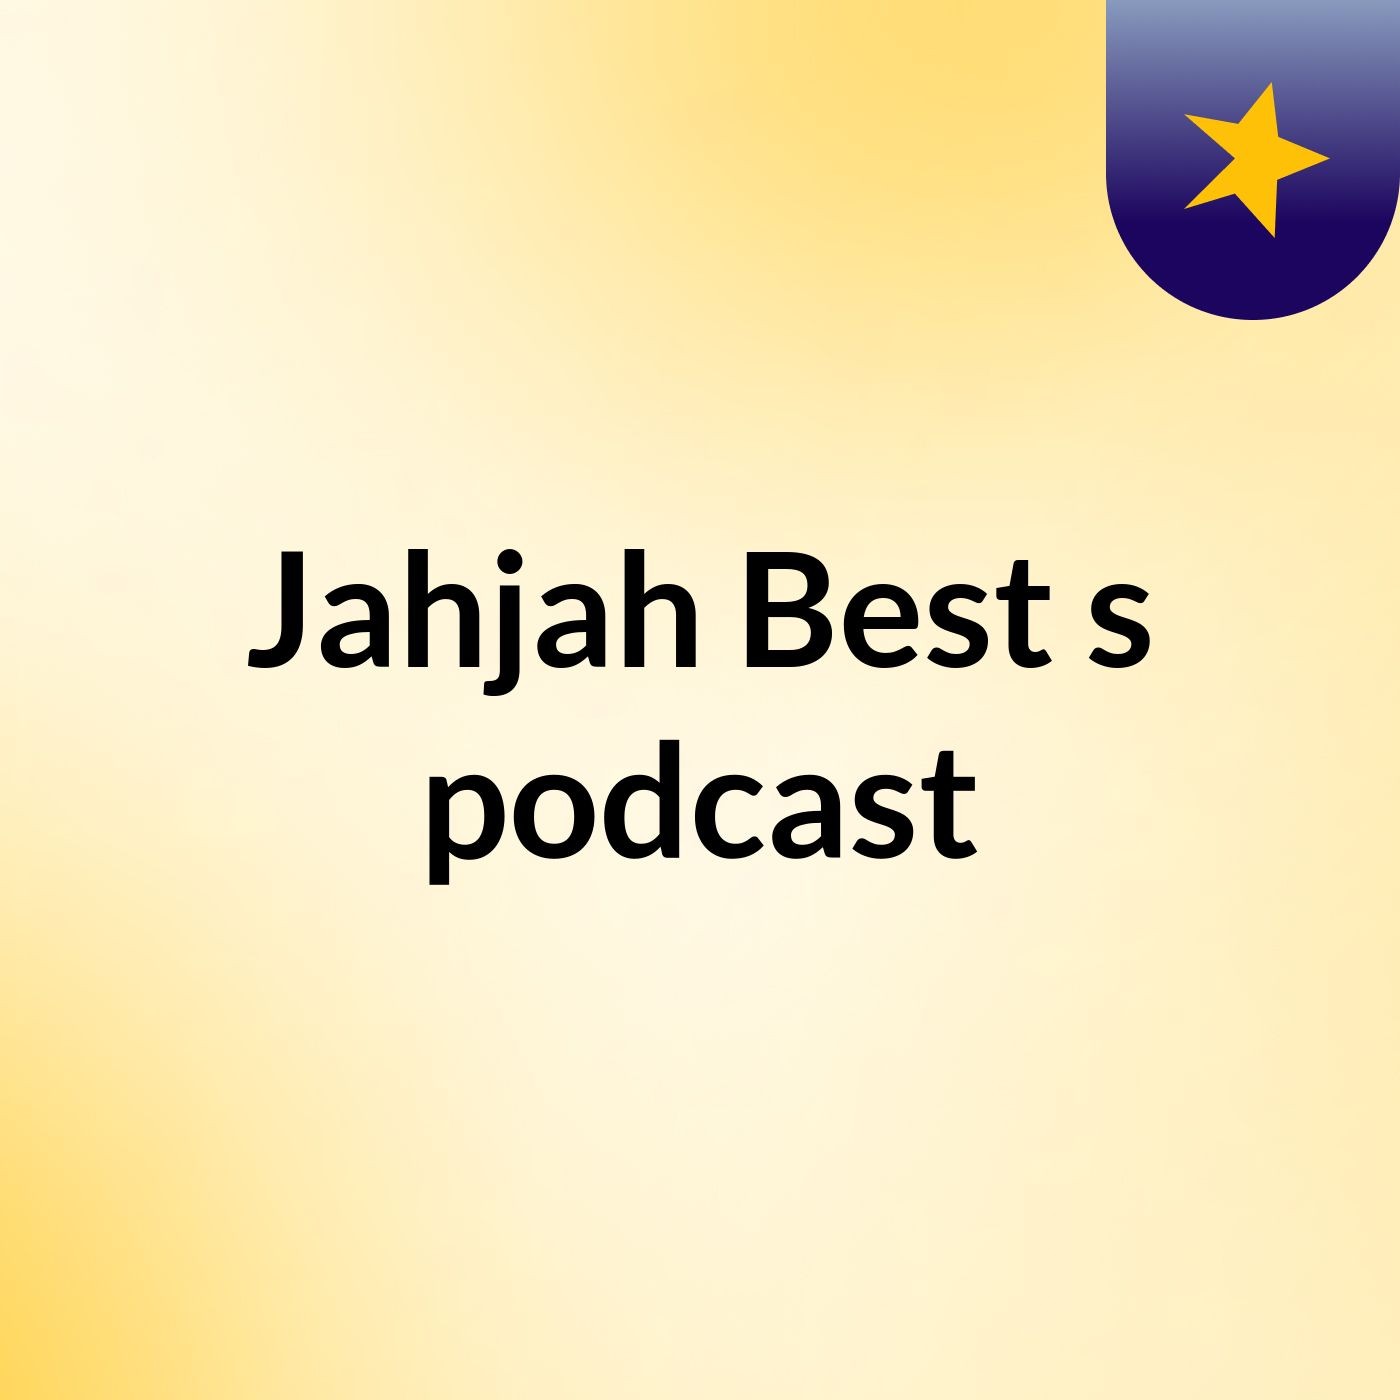 Jahjah Best's podcast